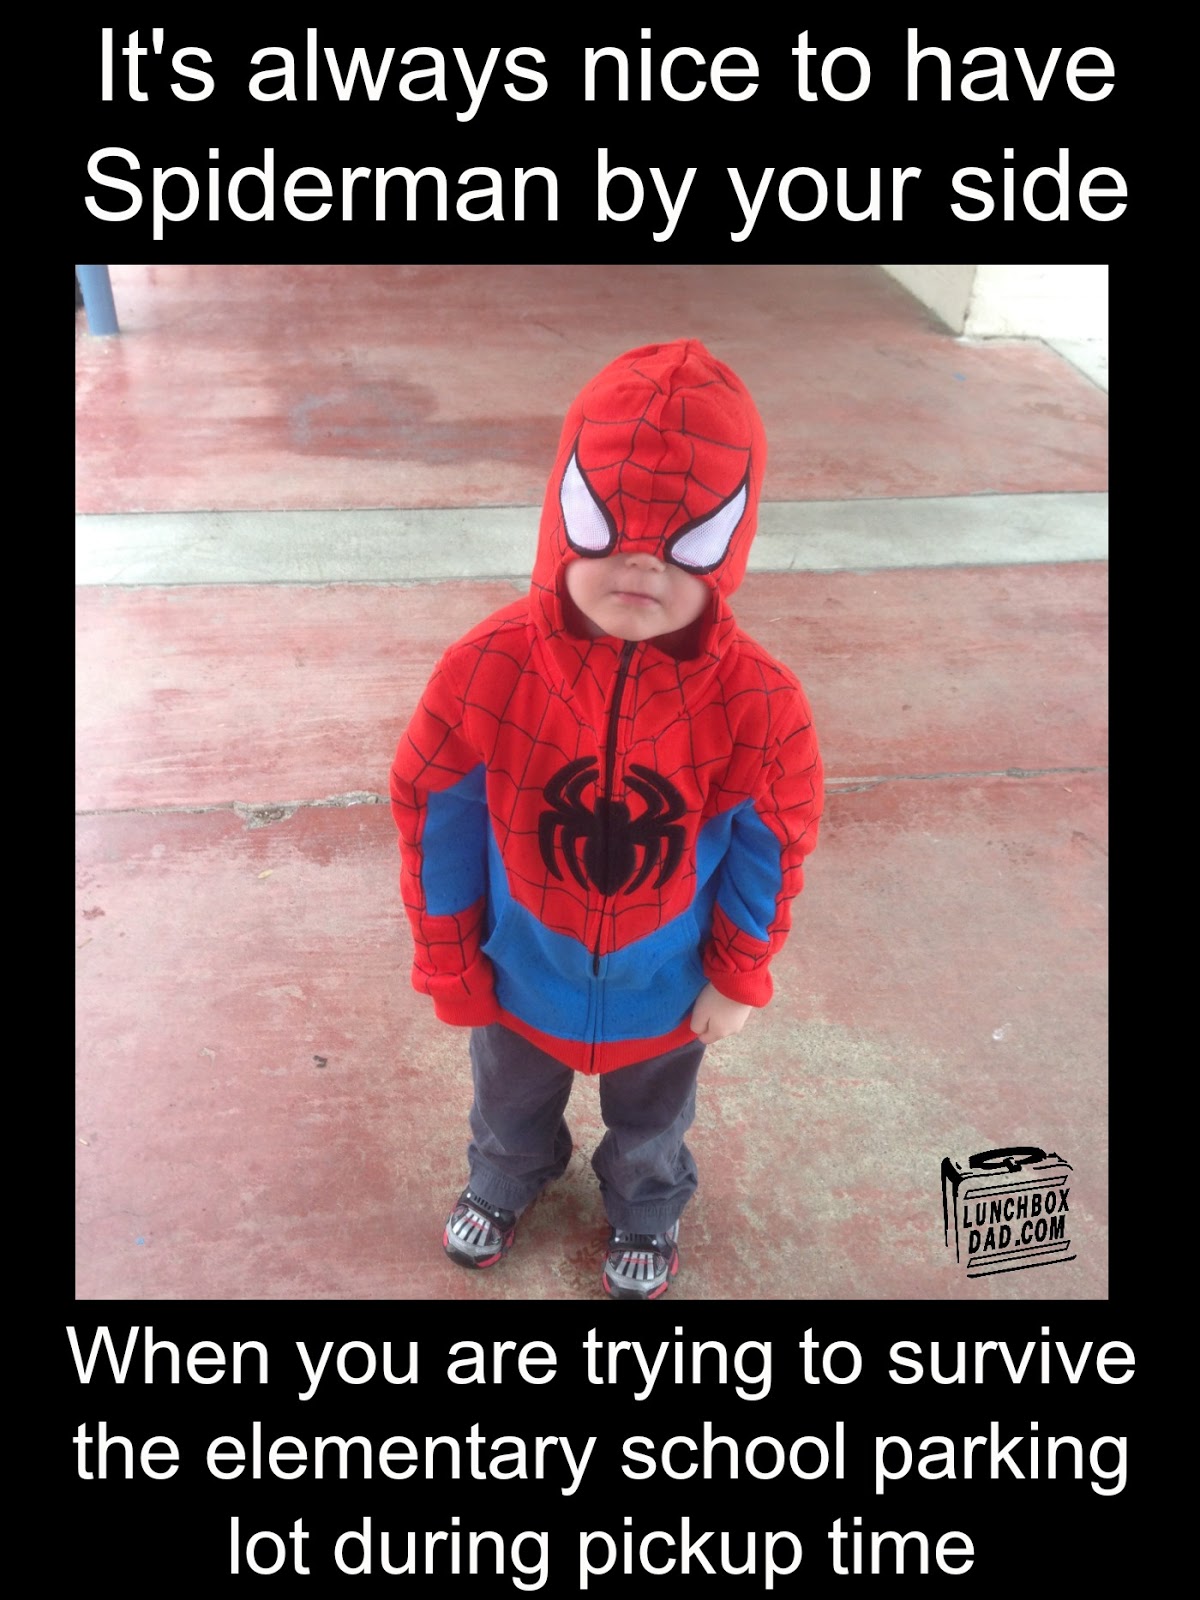 My Son the Superhero